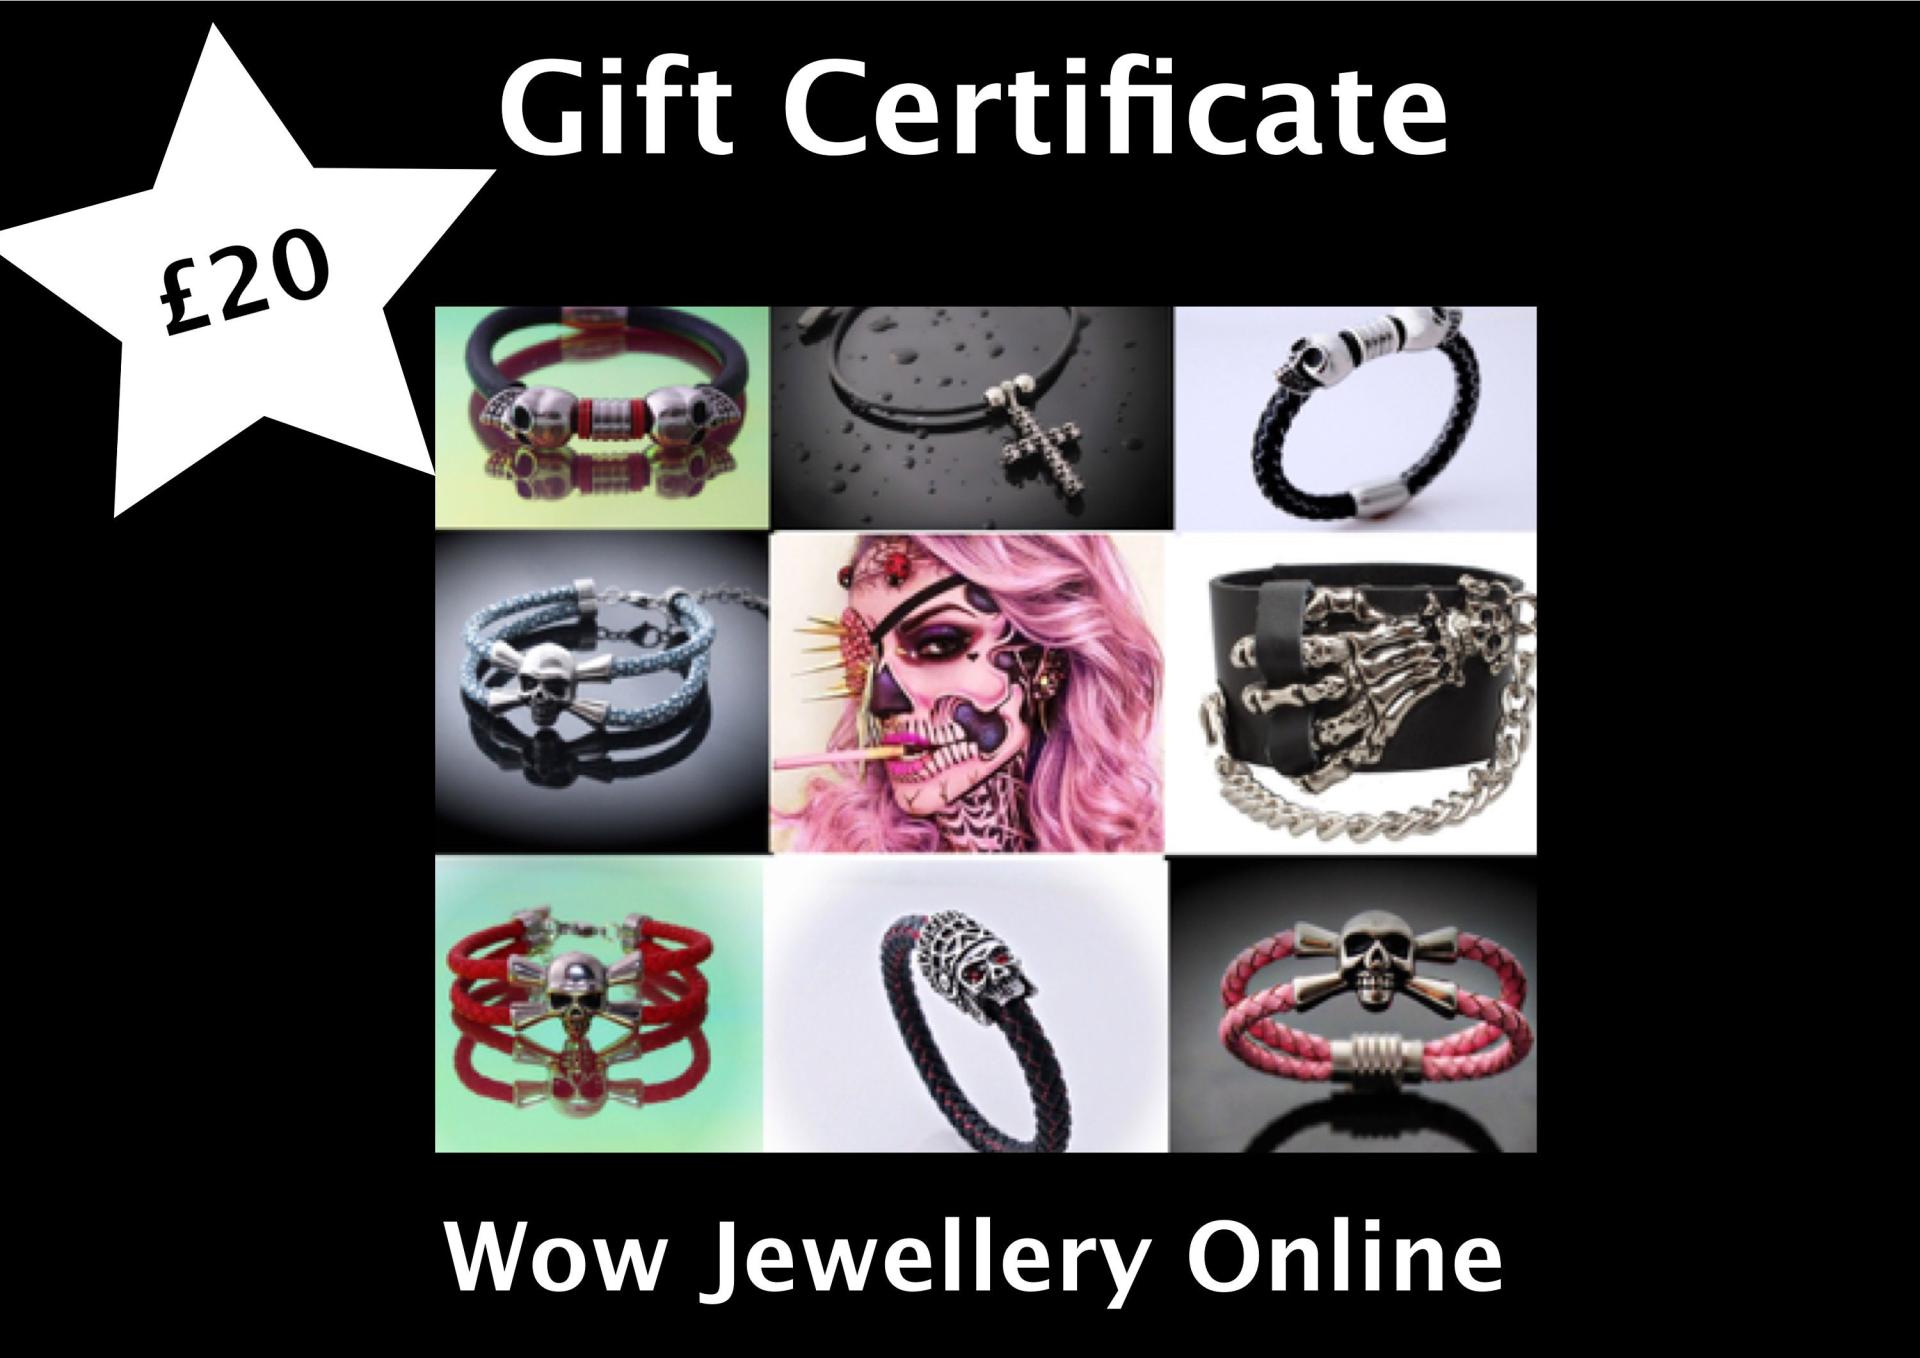 Gift Certificate - Wow Jewellery Online